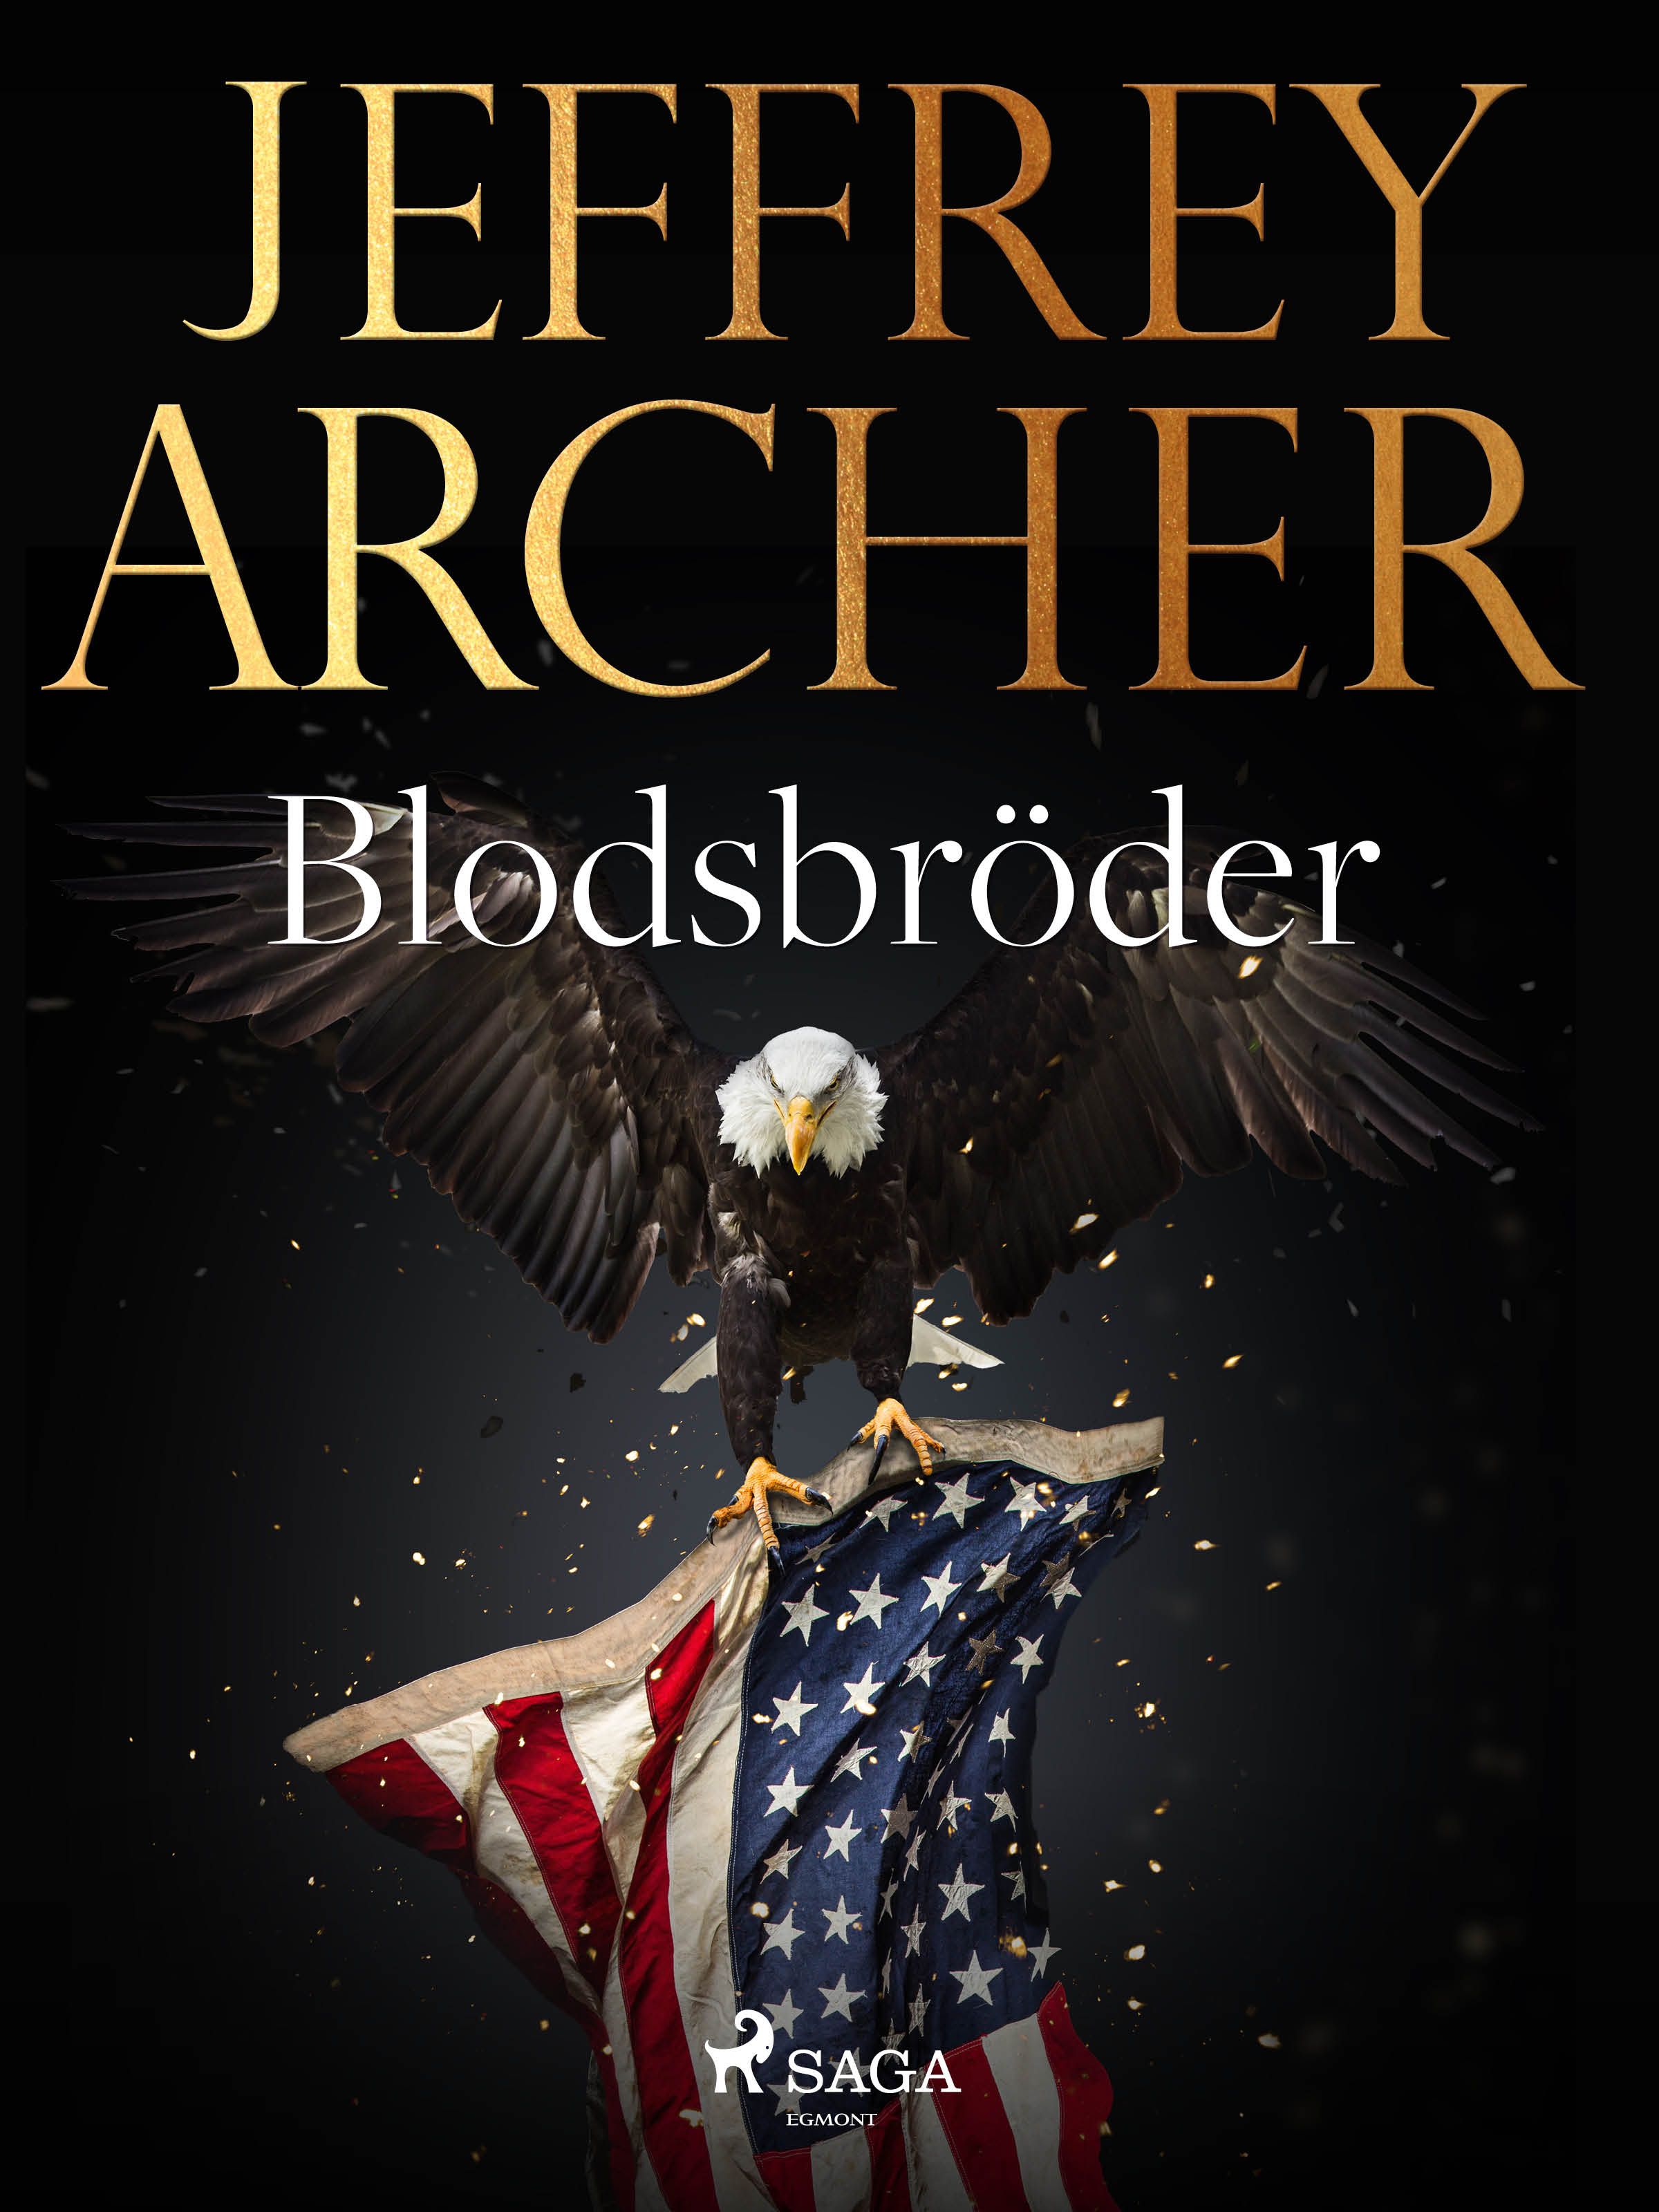 Blodsbröder, eBook by Jeffrey Archer